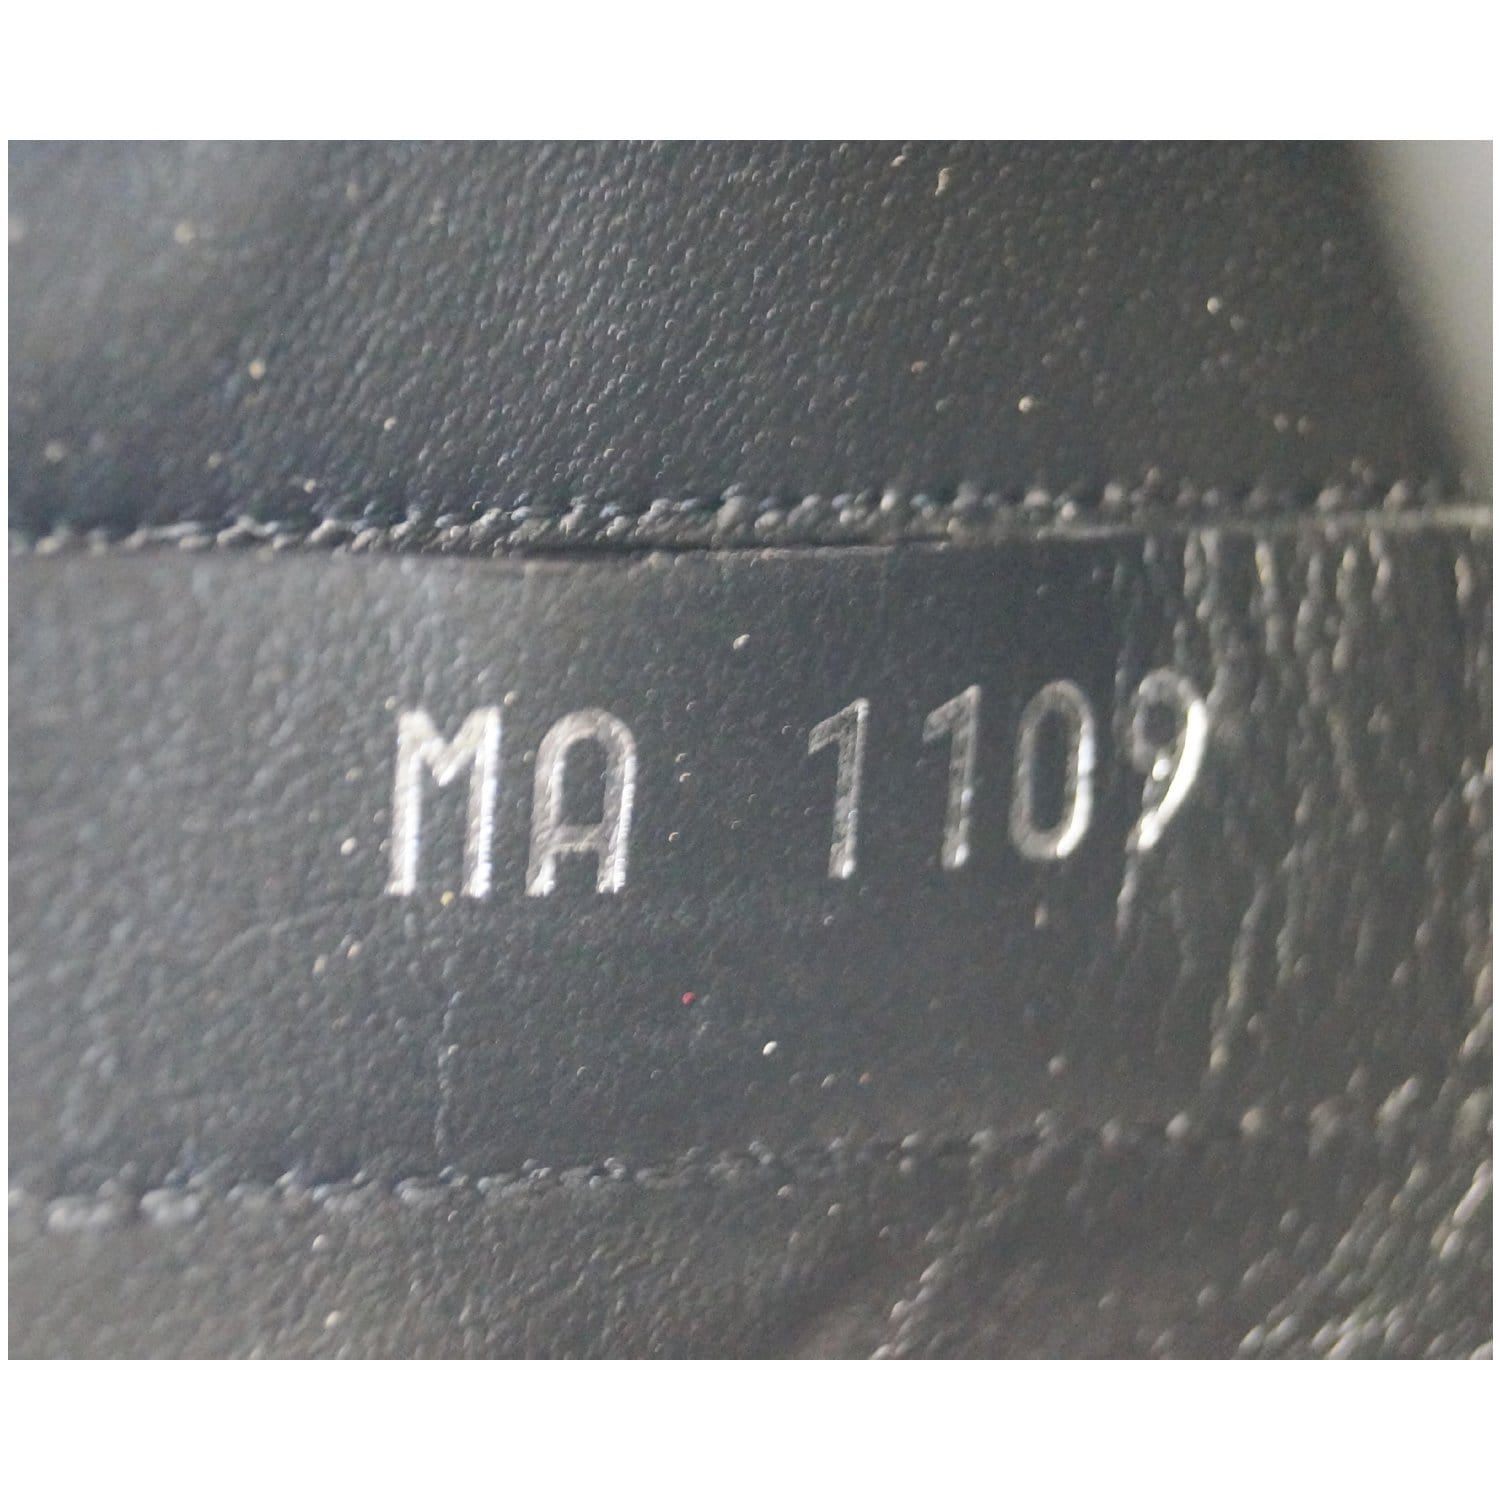 Louis Vuitton Star Trail Ankle Boots Patent Monogram - Klueles